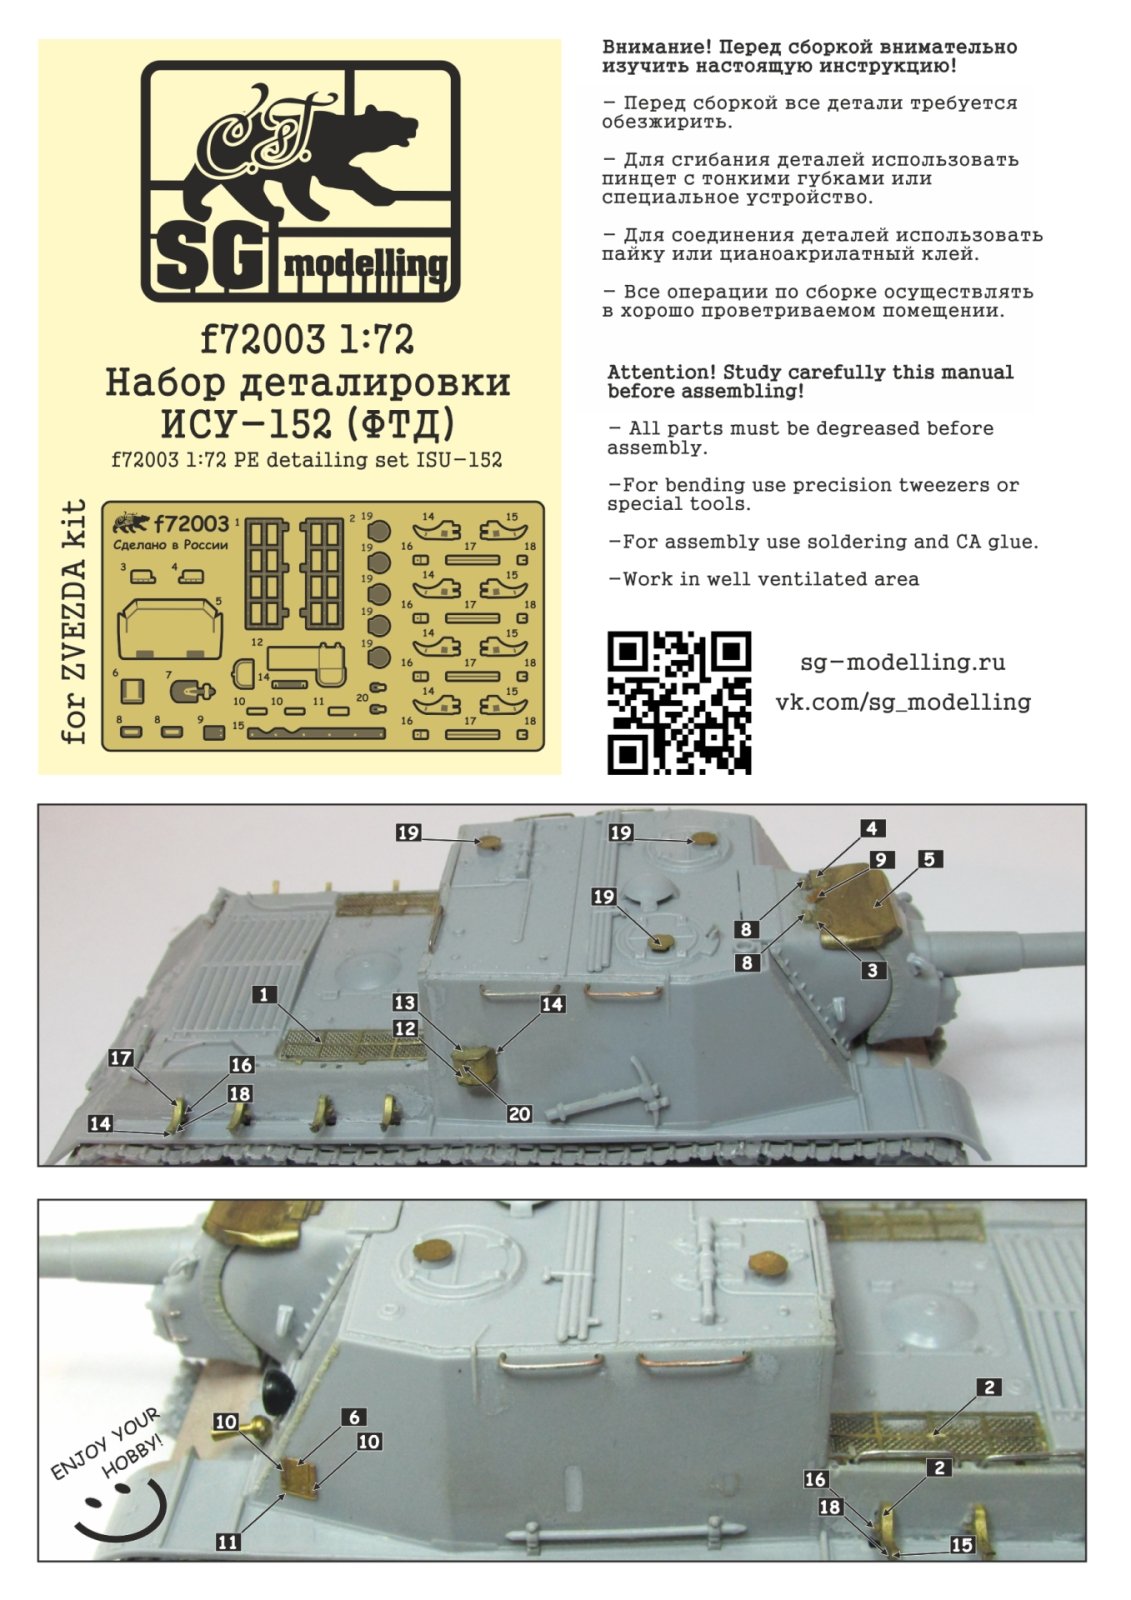 F72003 1:72 Set of detailing ISU-152 (FTD) - imodeller.store